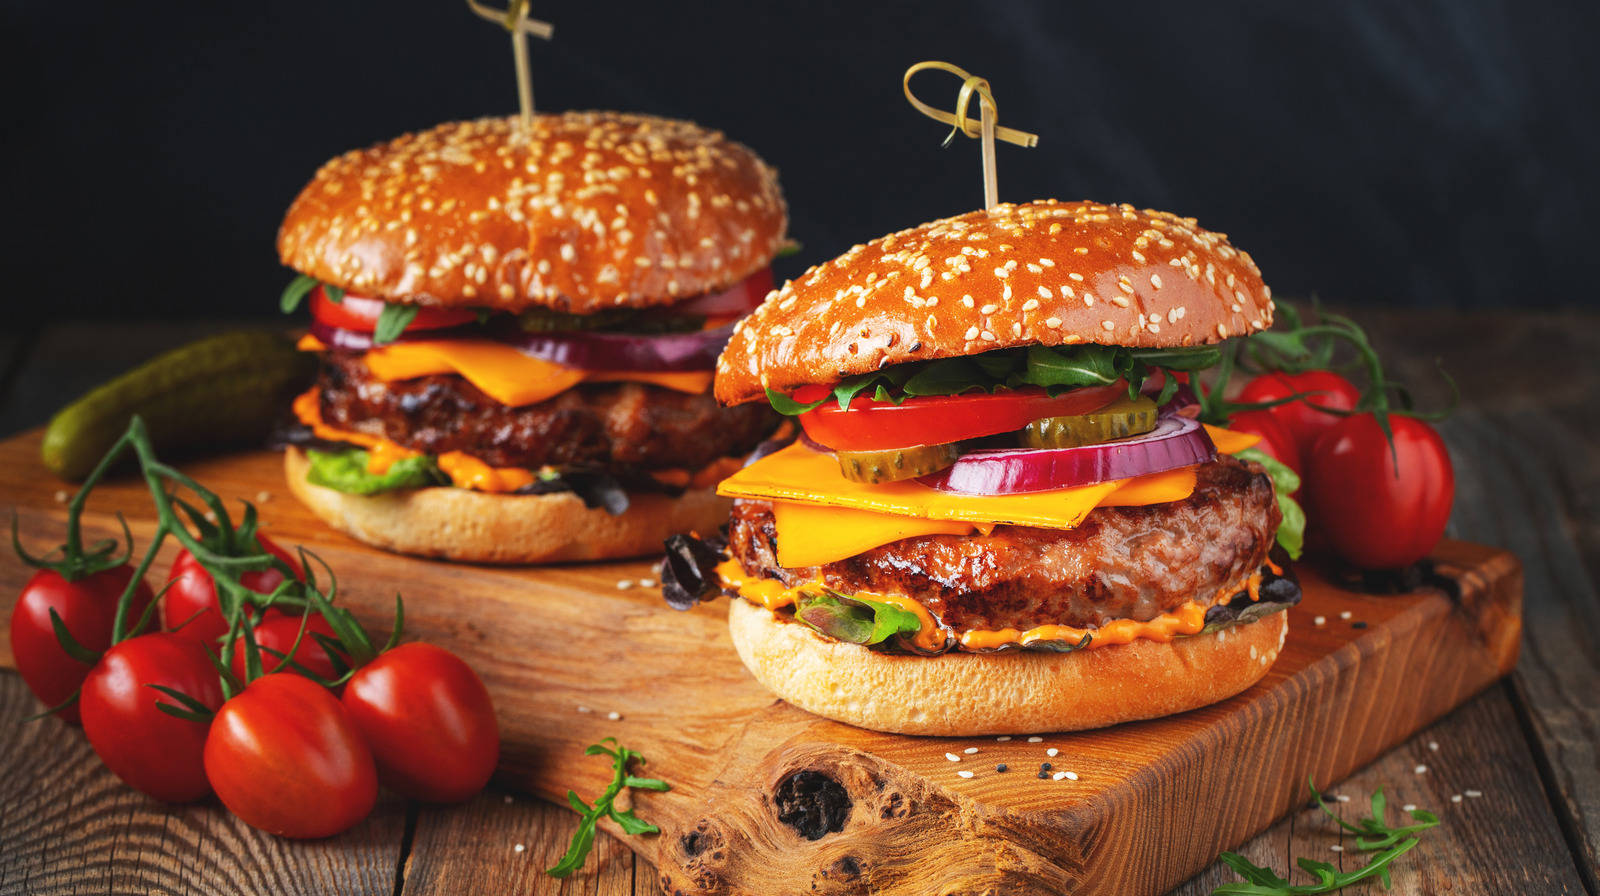 A Crave-worthy Burger King Whopper Sandwich Wallpaper